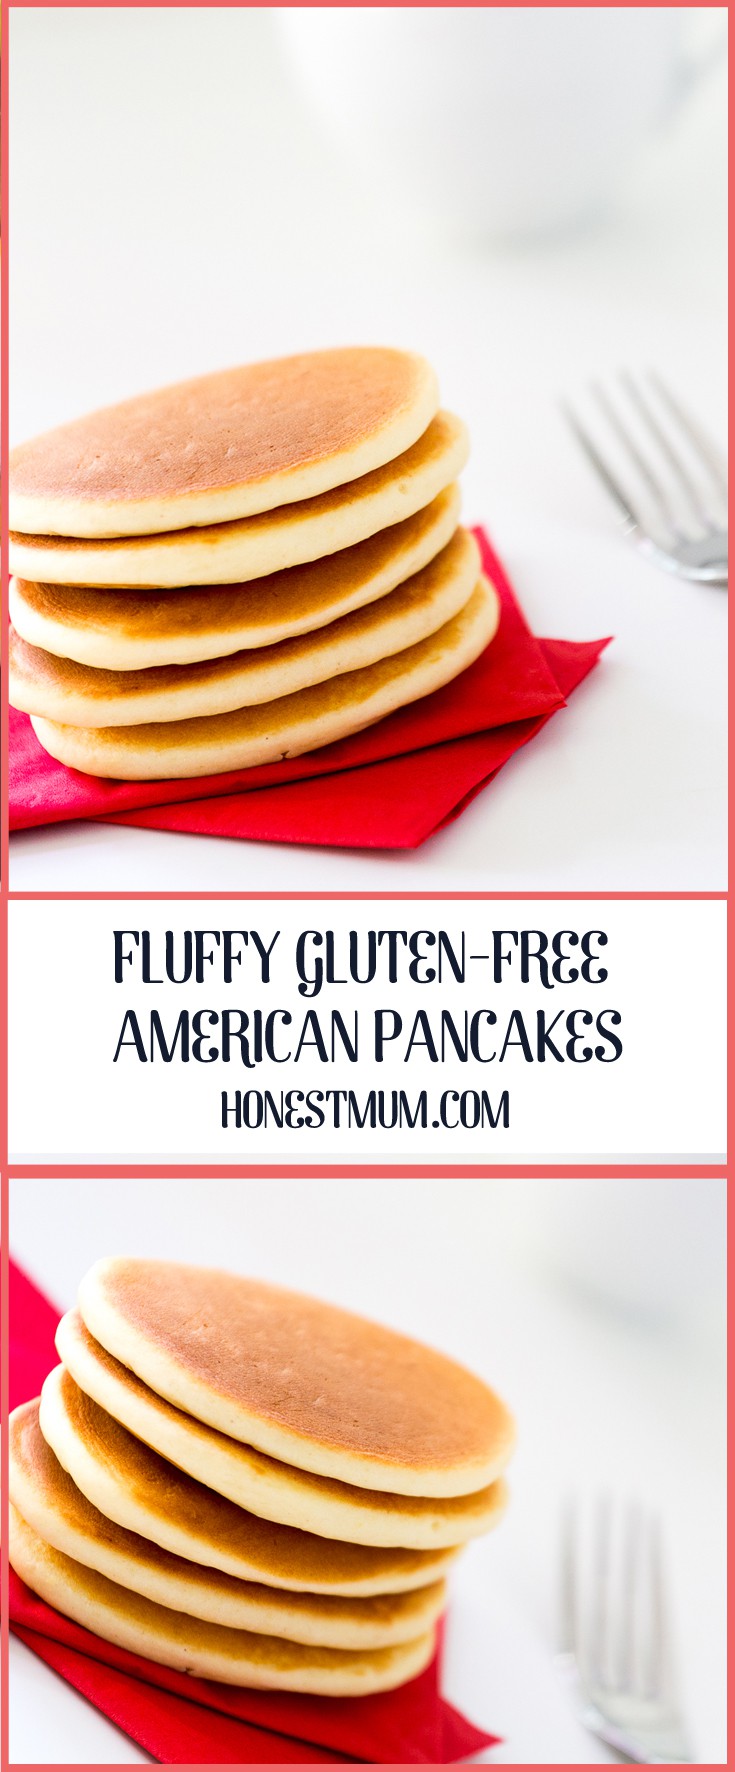  Fluffy Gluten-Free American Pancakes